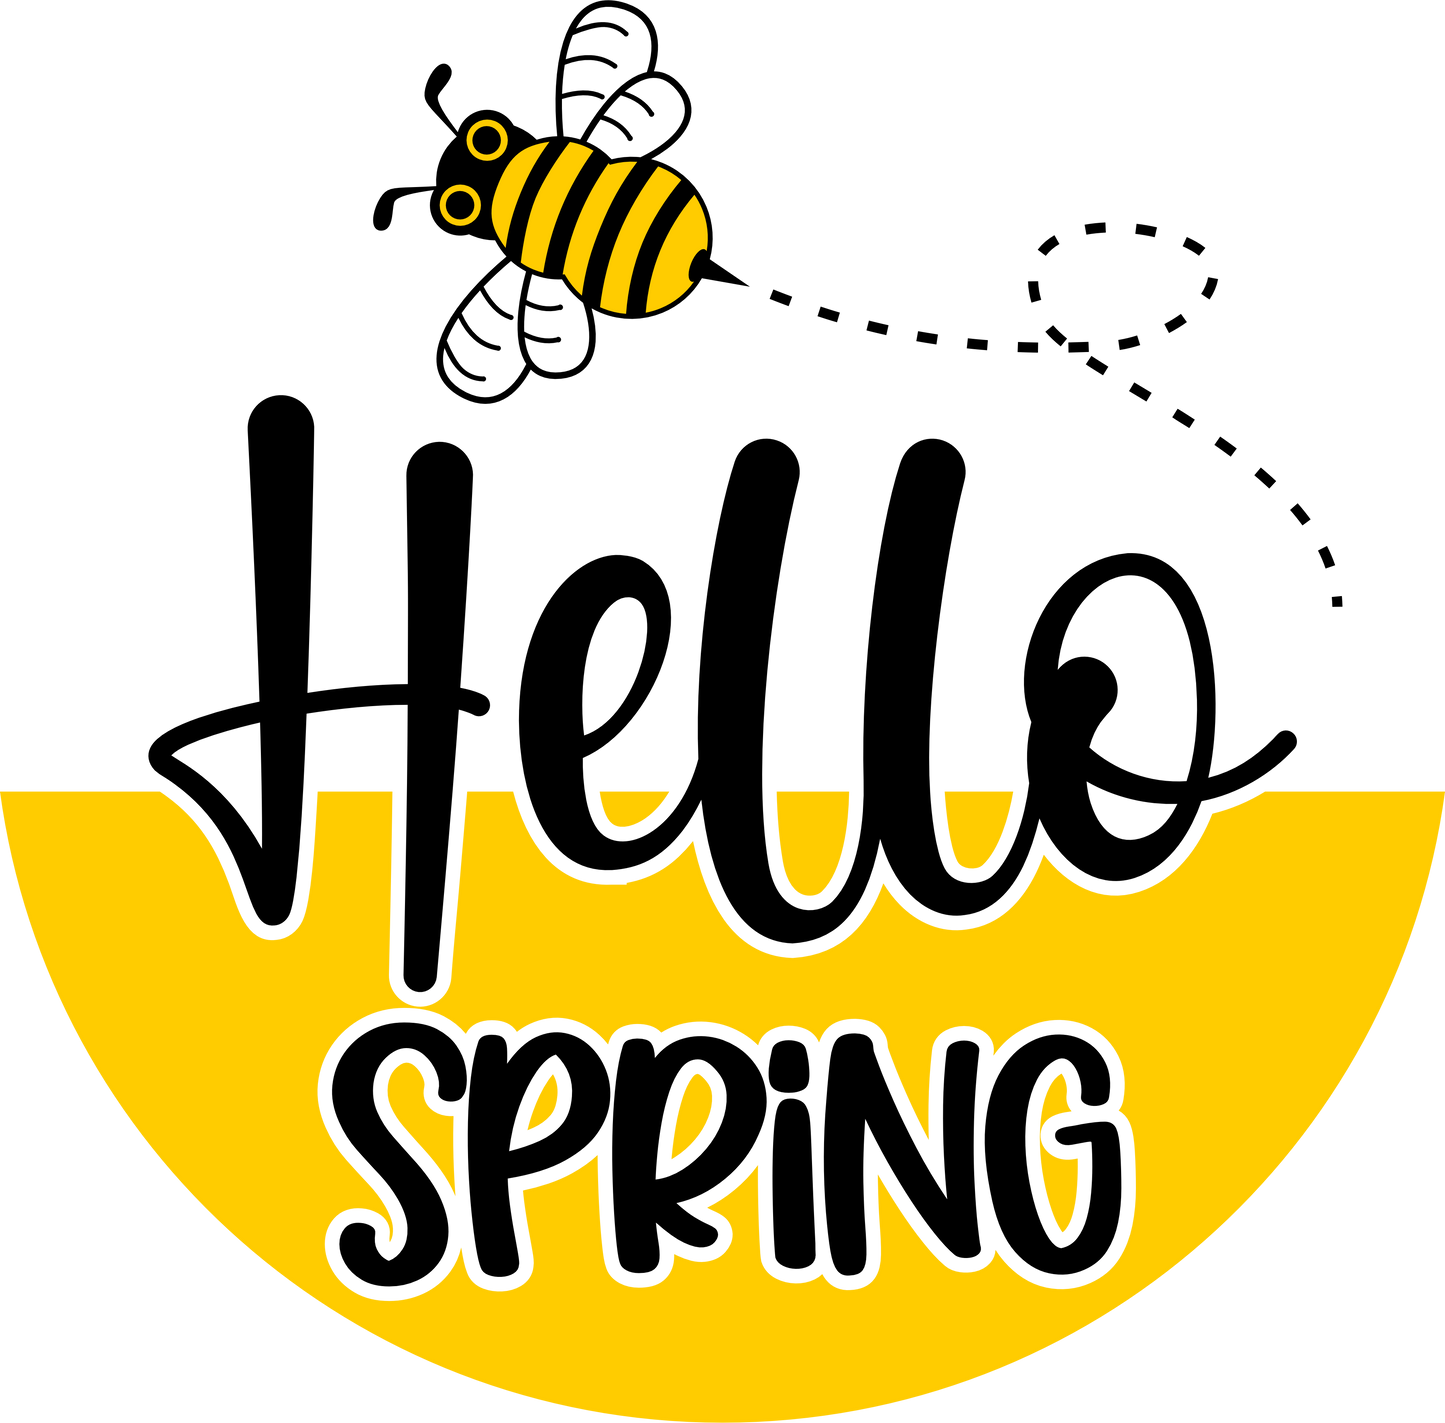 Hello Spring Honeybee Round Sign Kit